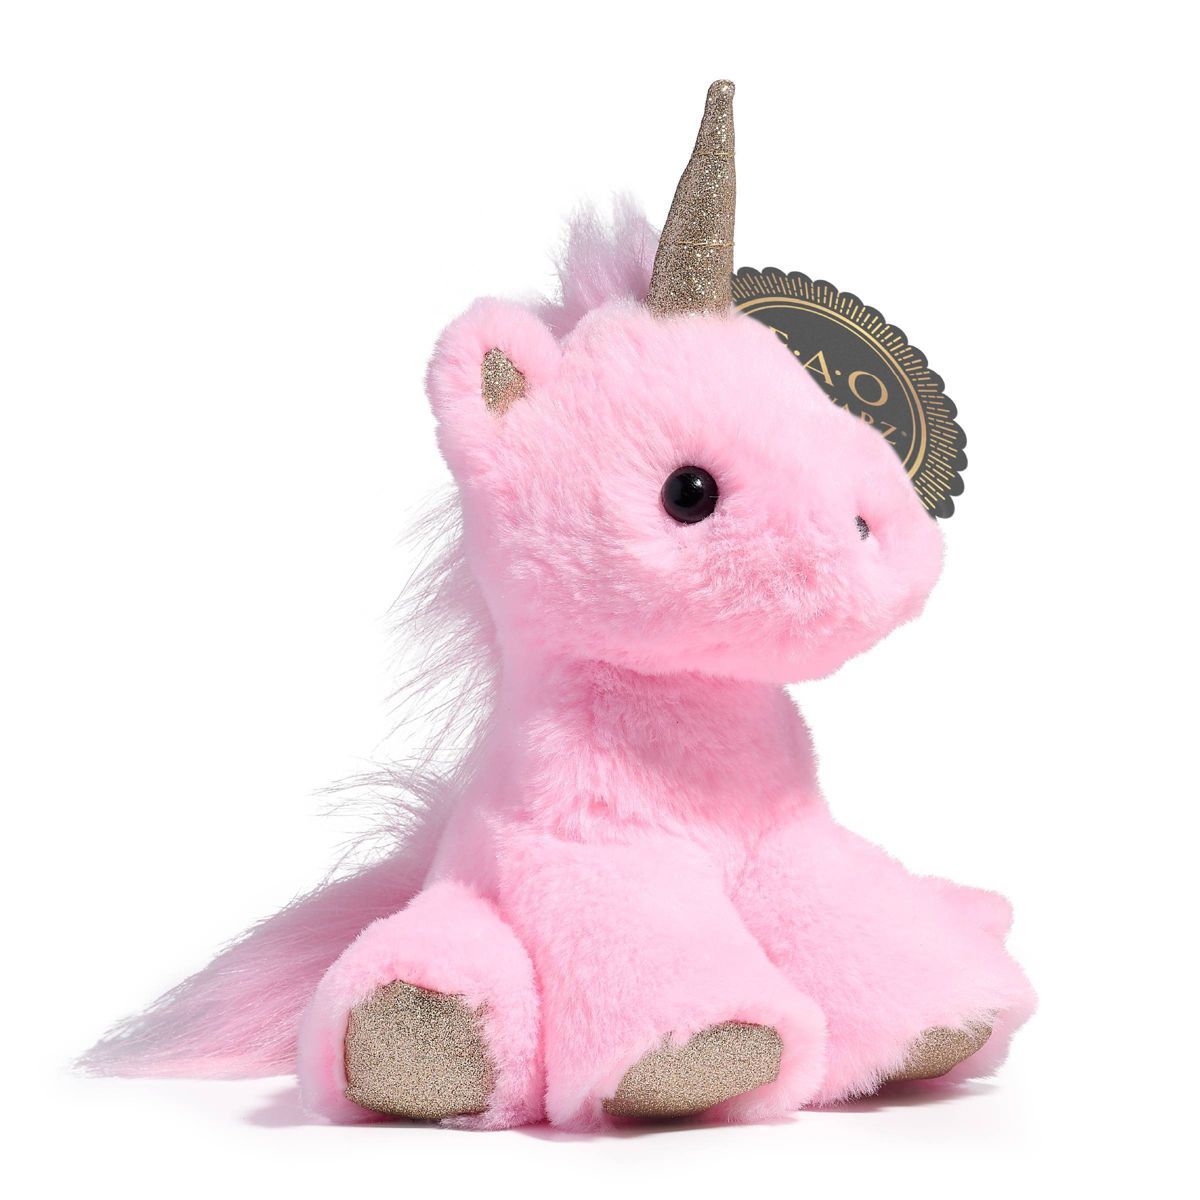 FAO Schwarz Toy Plush Baby Unicorn 6" - PinkGold (Target Exclusive) | Target